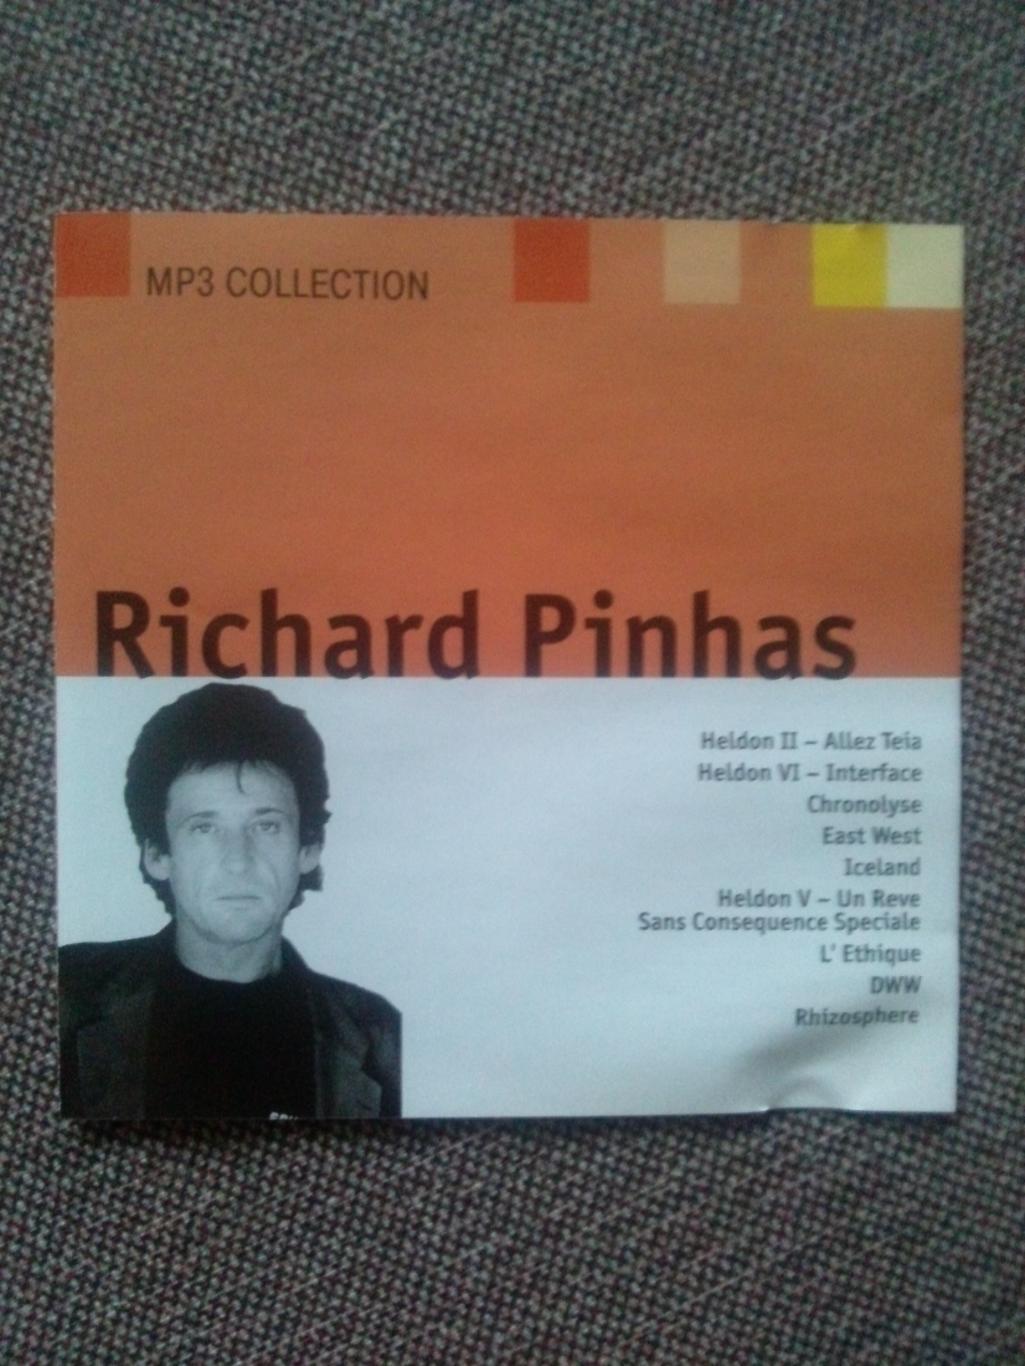 MP - 3 CD диск : Richard Pinhas (Ричард Пинхас) 1975 - 1992 гг. (9 альбомов) Рок